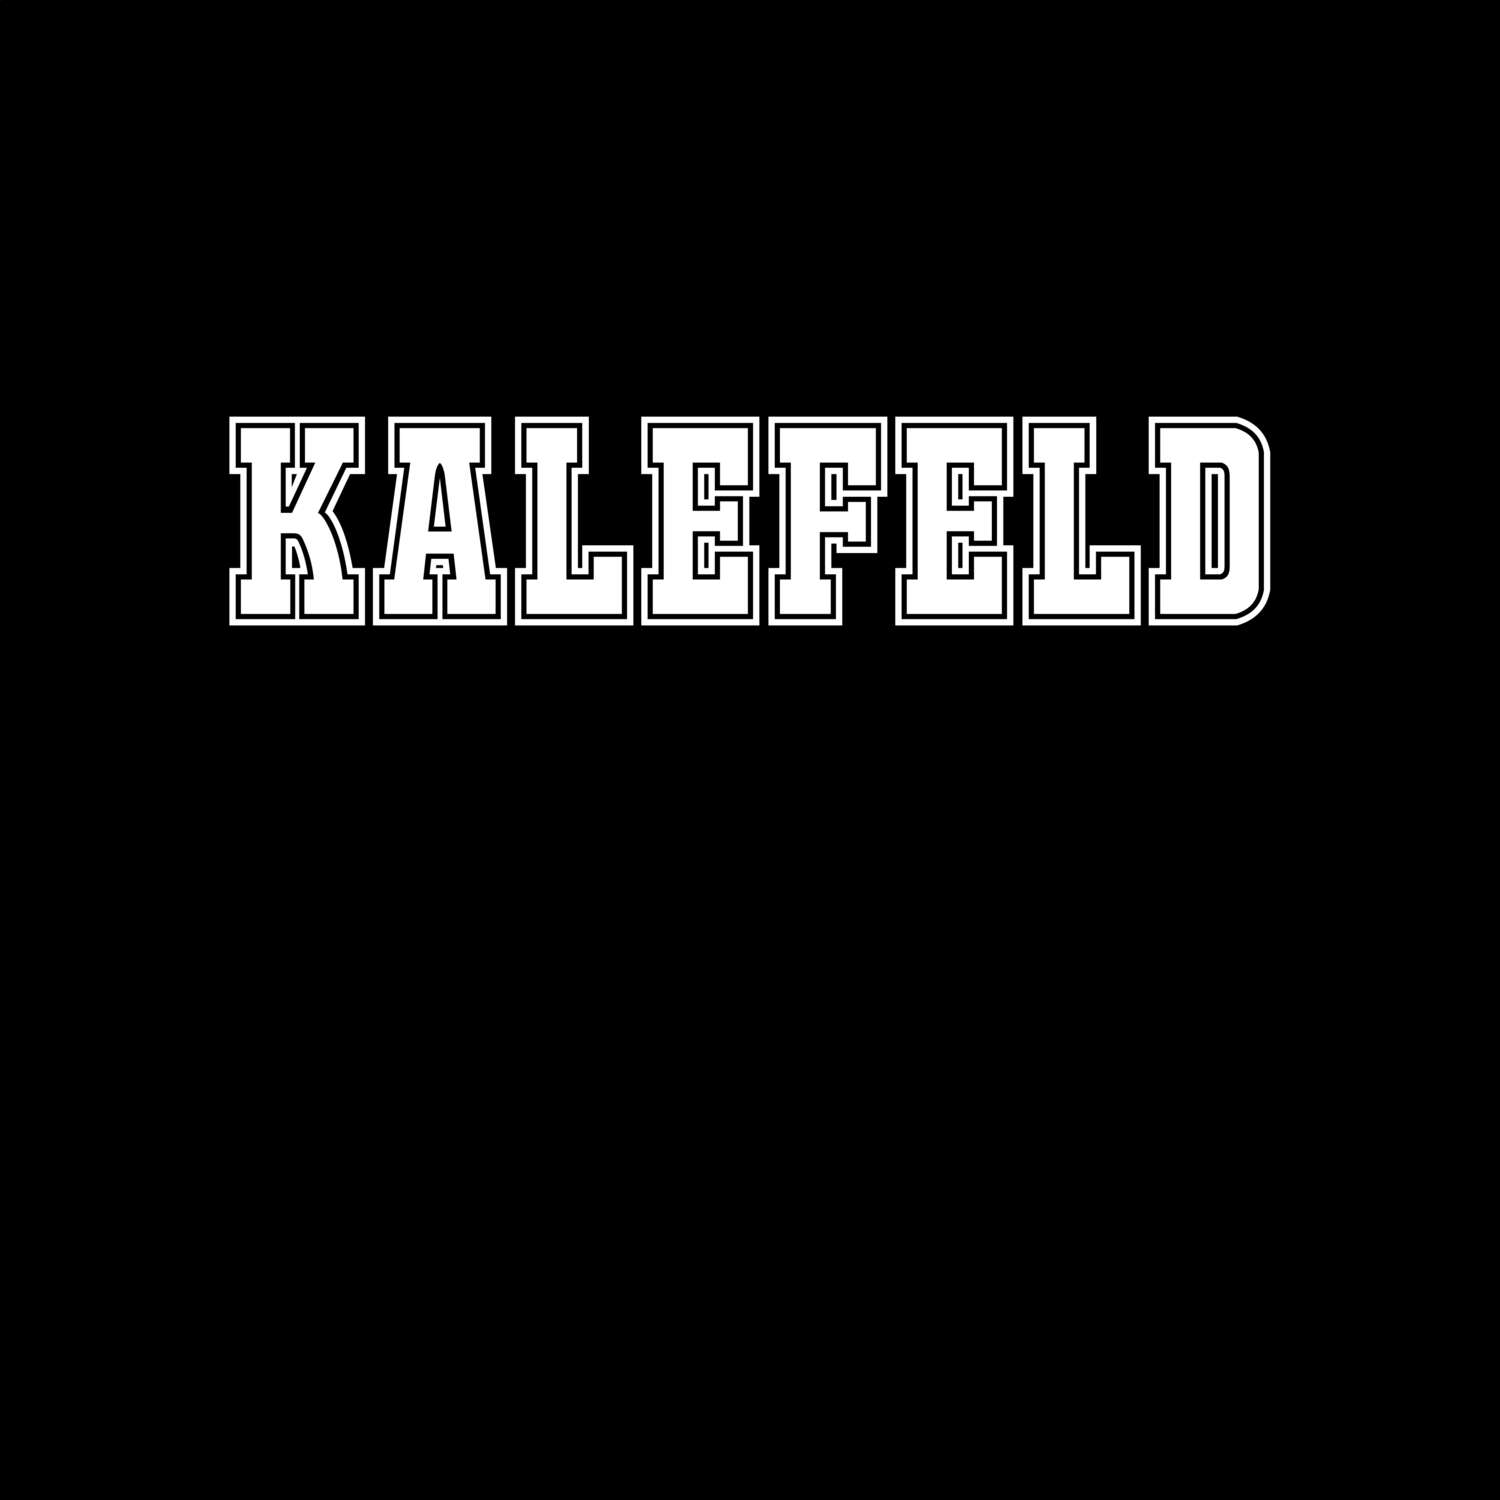 Kalefeld T-Shirt »Classic«